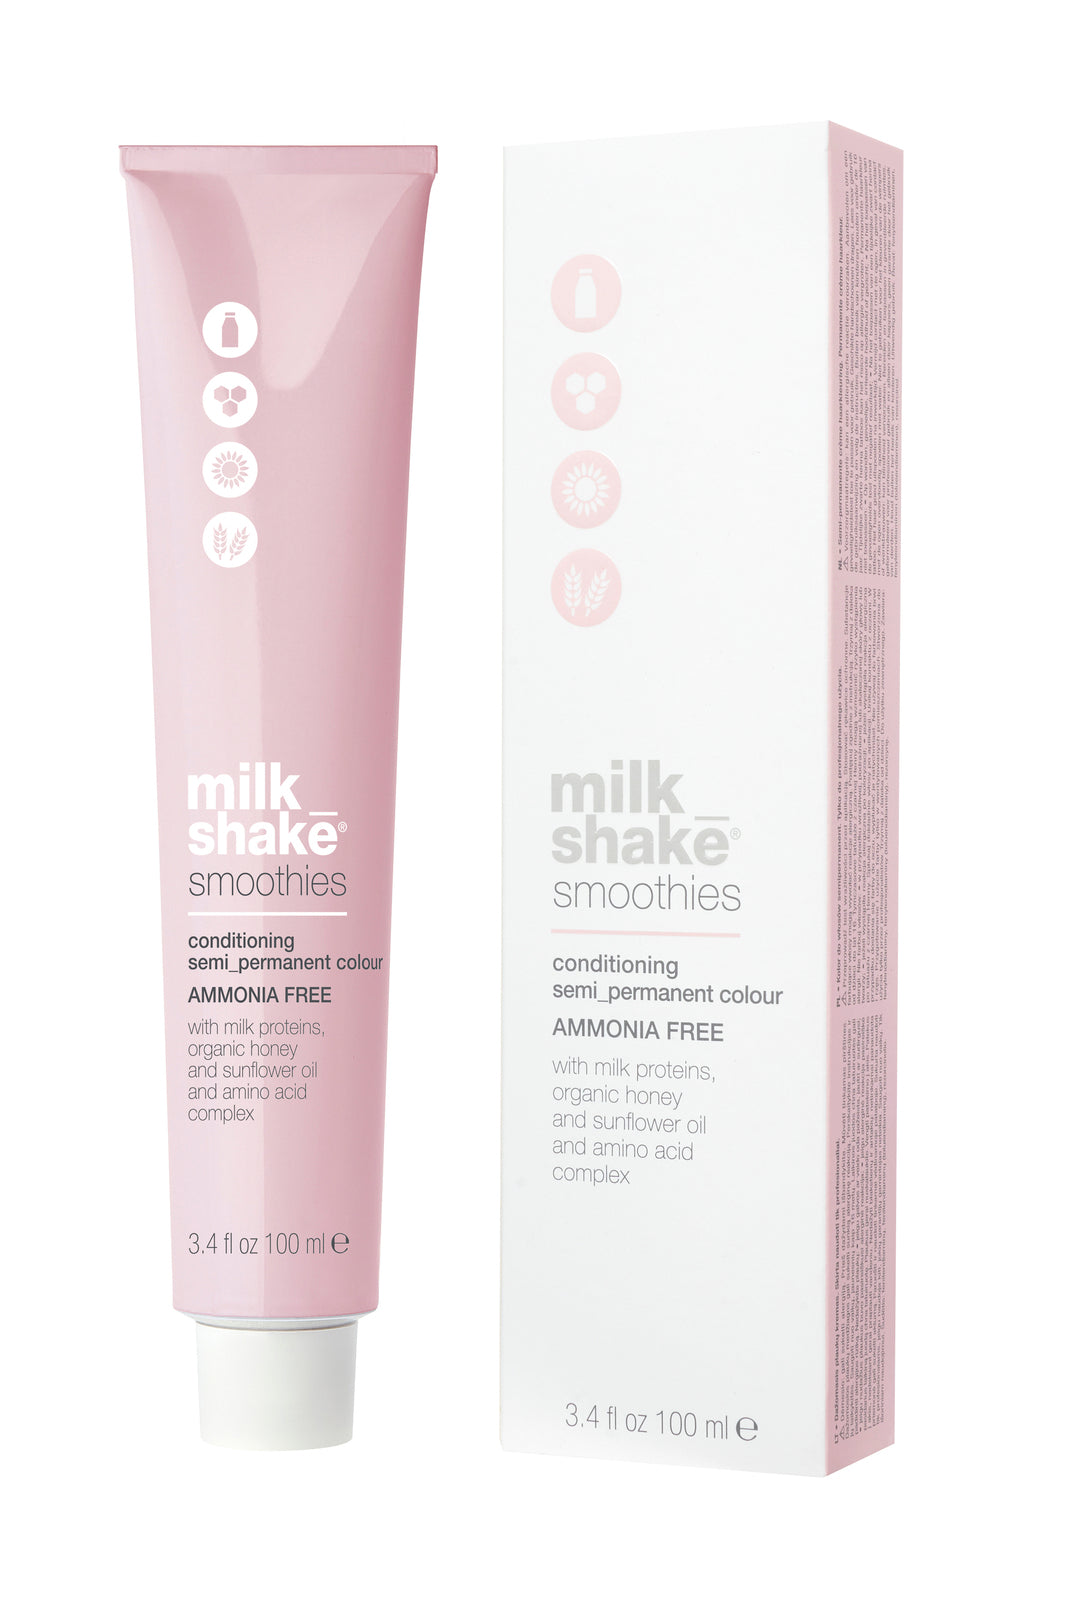 Milkshake smoothies semi-permanent color 4.7